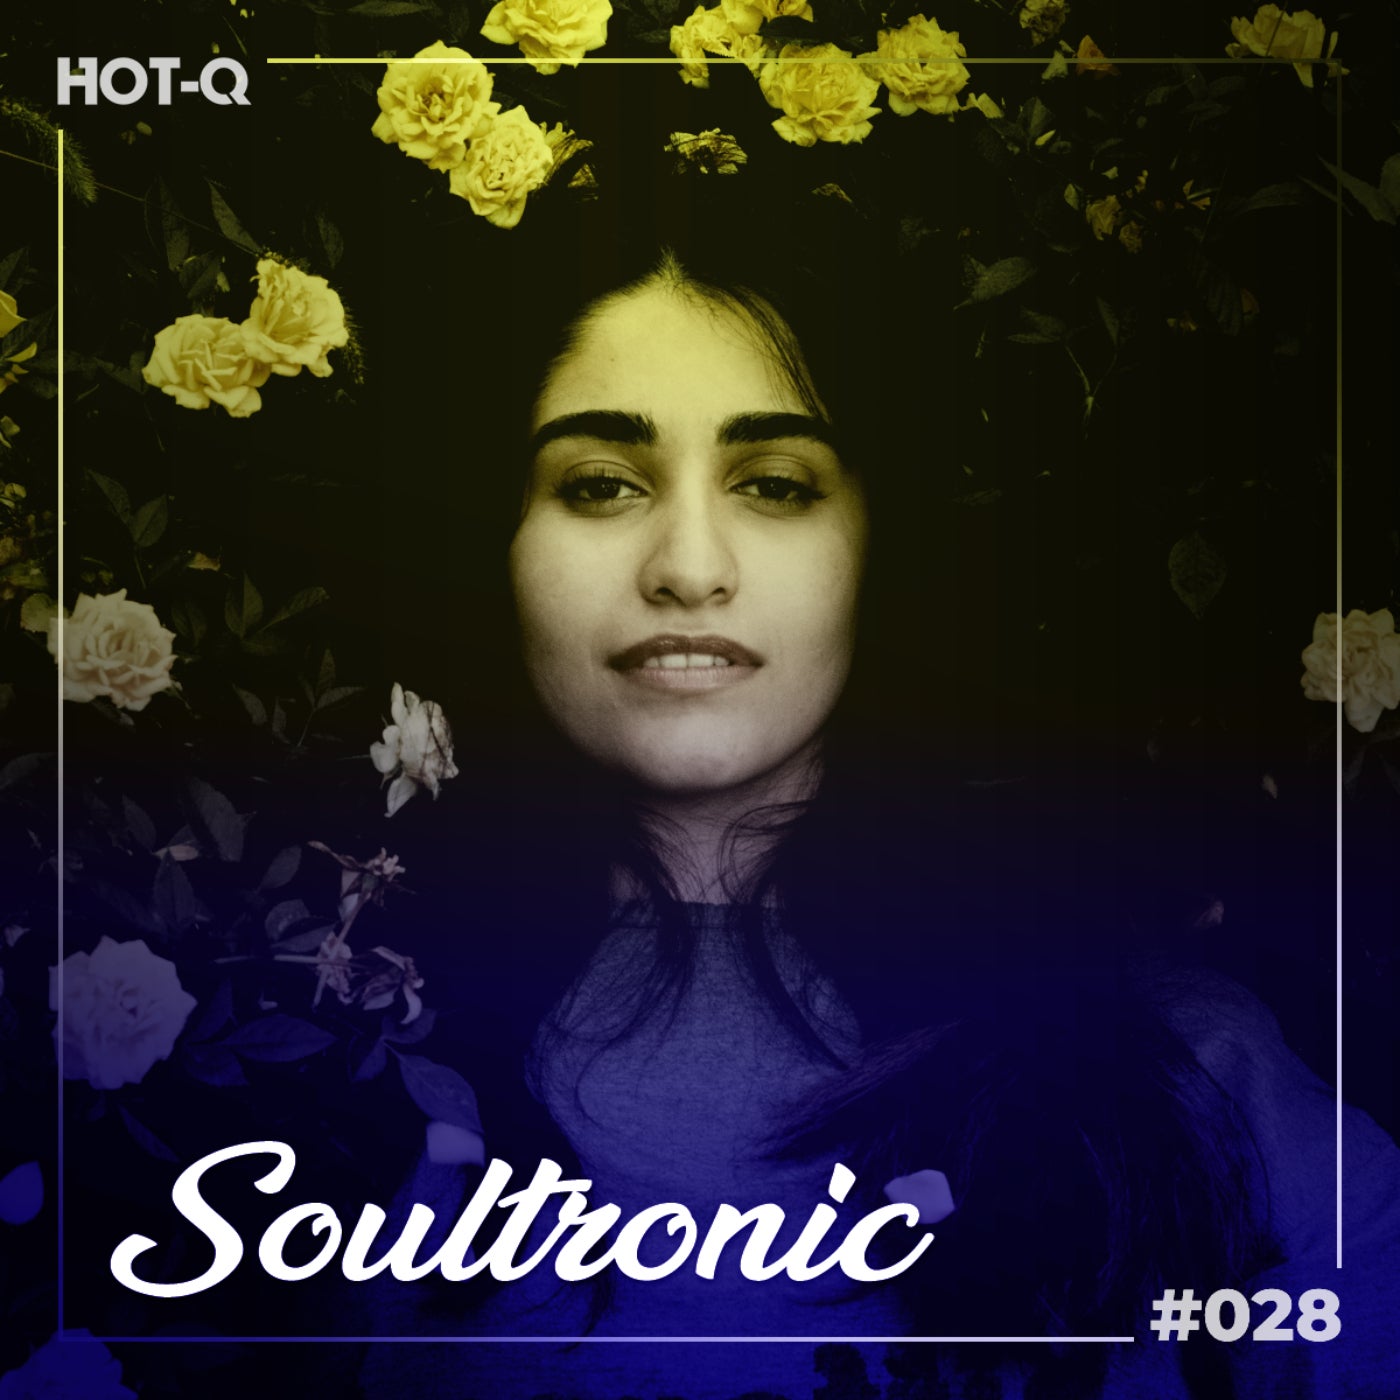 Soultronic 028